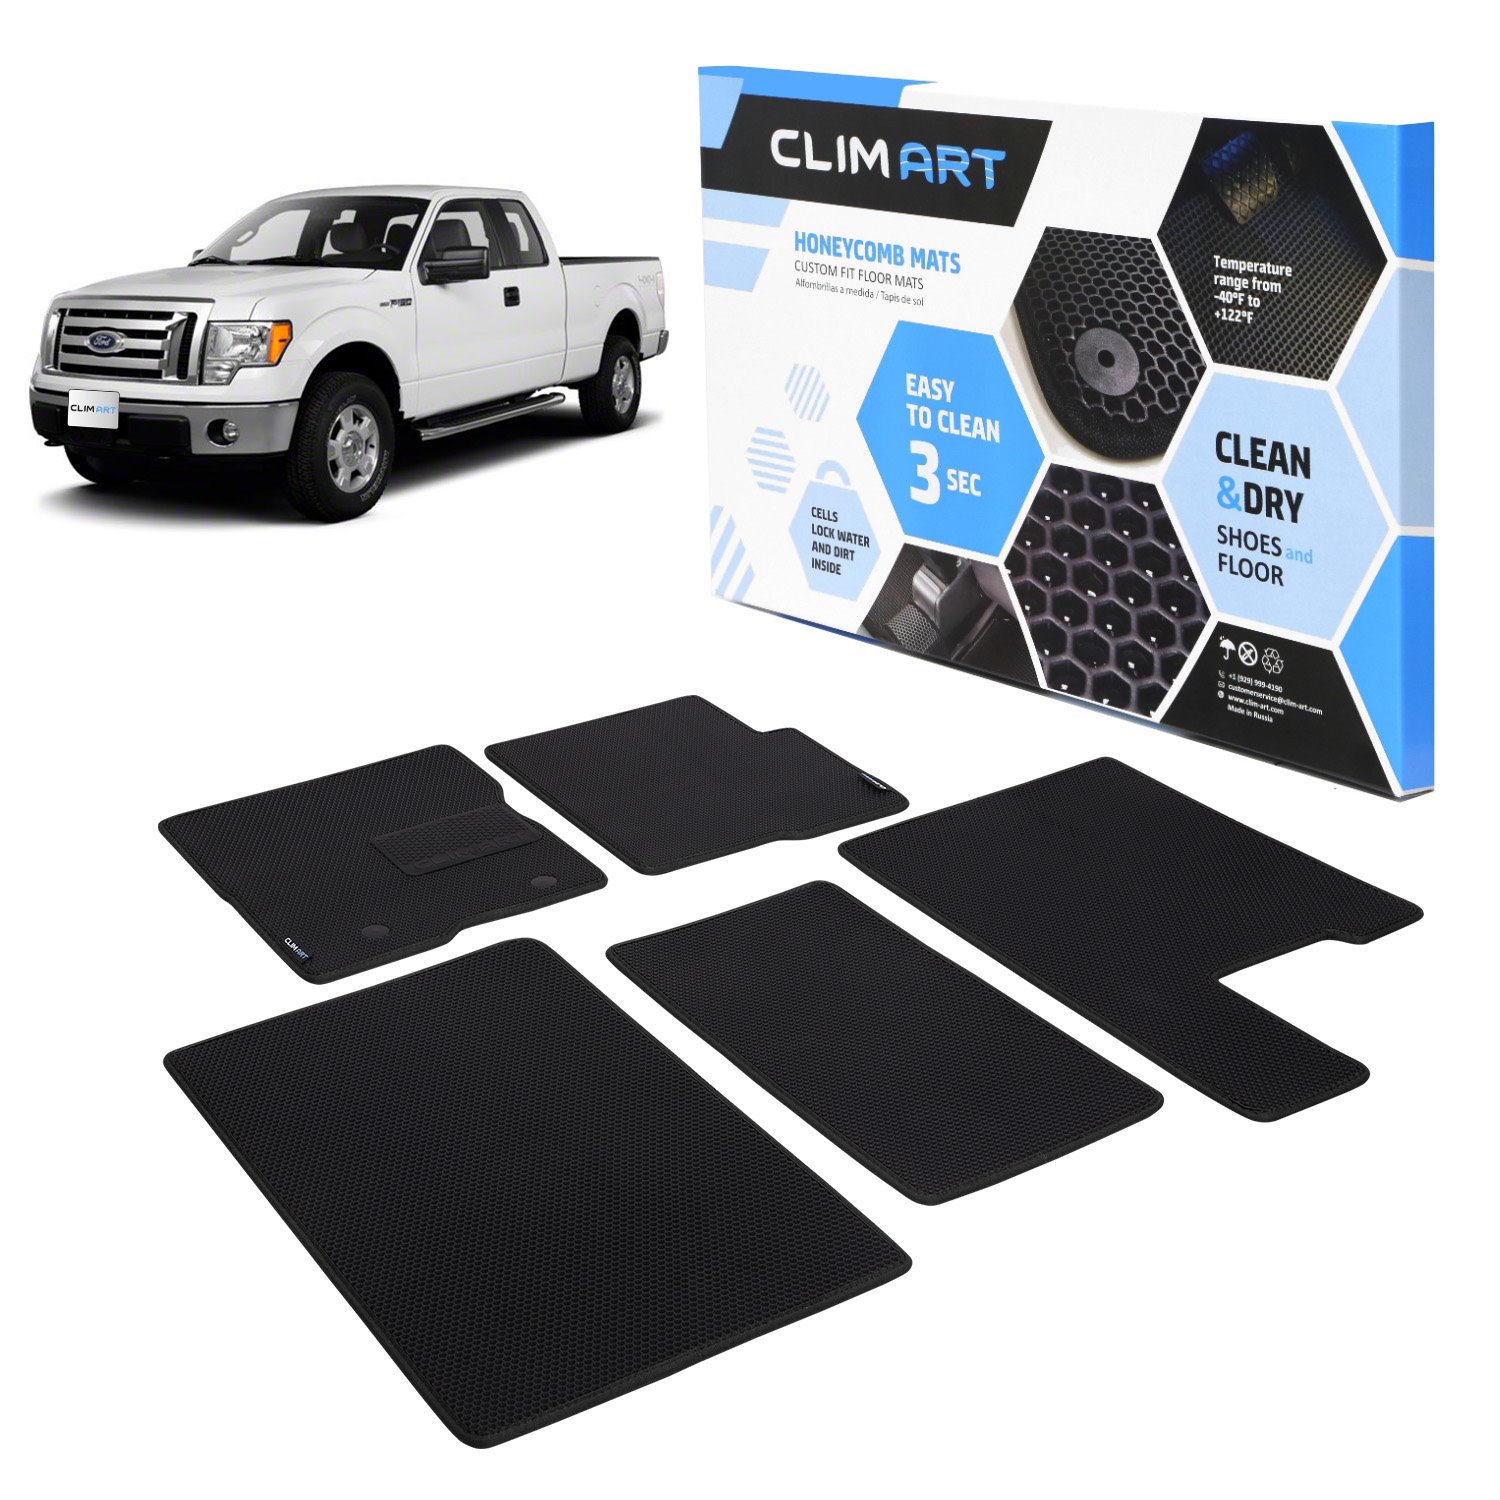 CLIM ART Honeycomb Custom Fit Floor Mats for 2010-2014 Ford F-150 SuperCrew